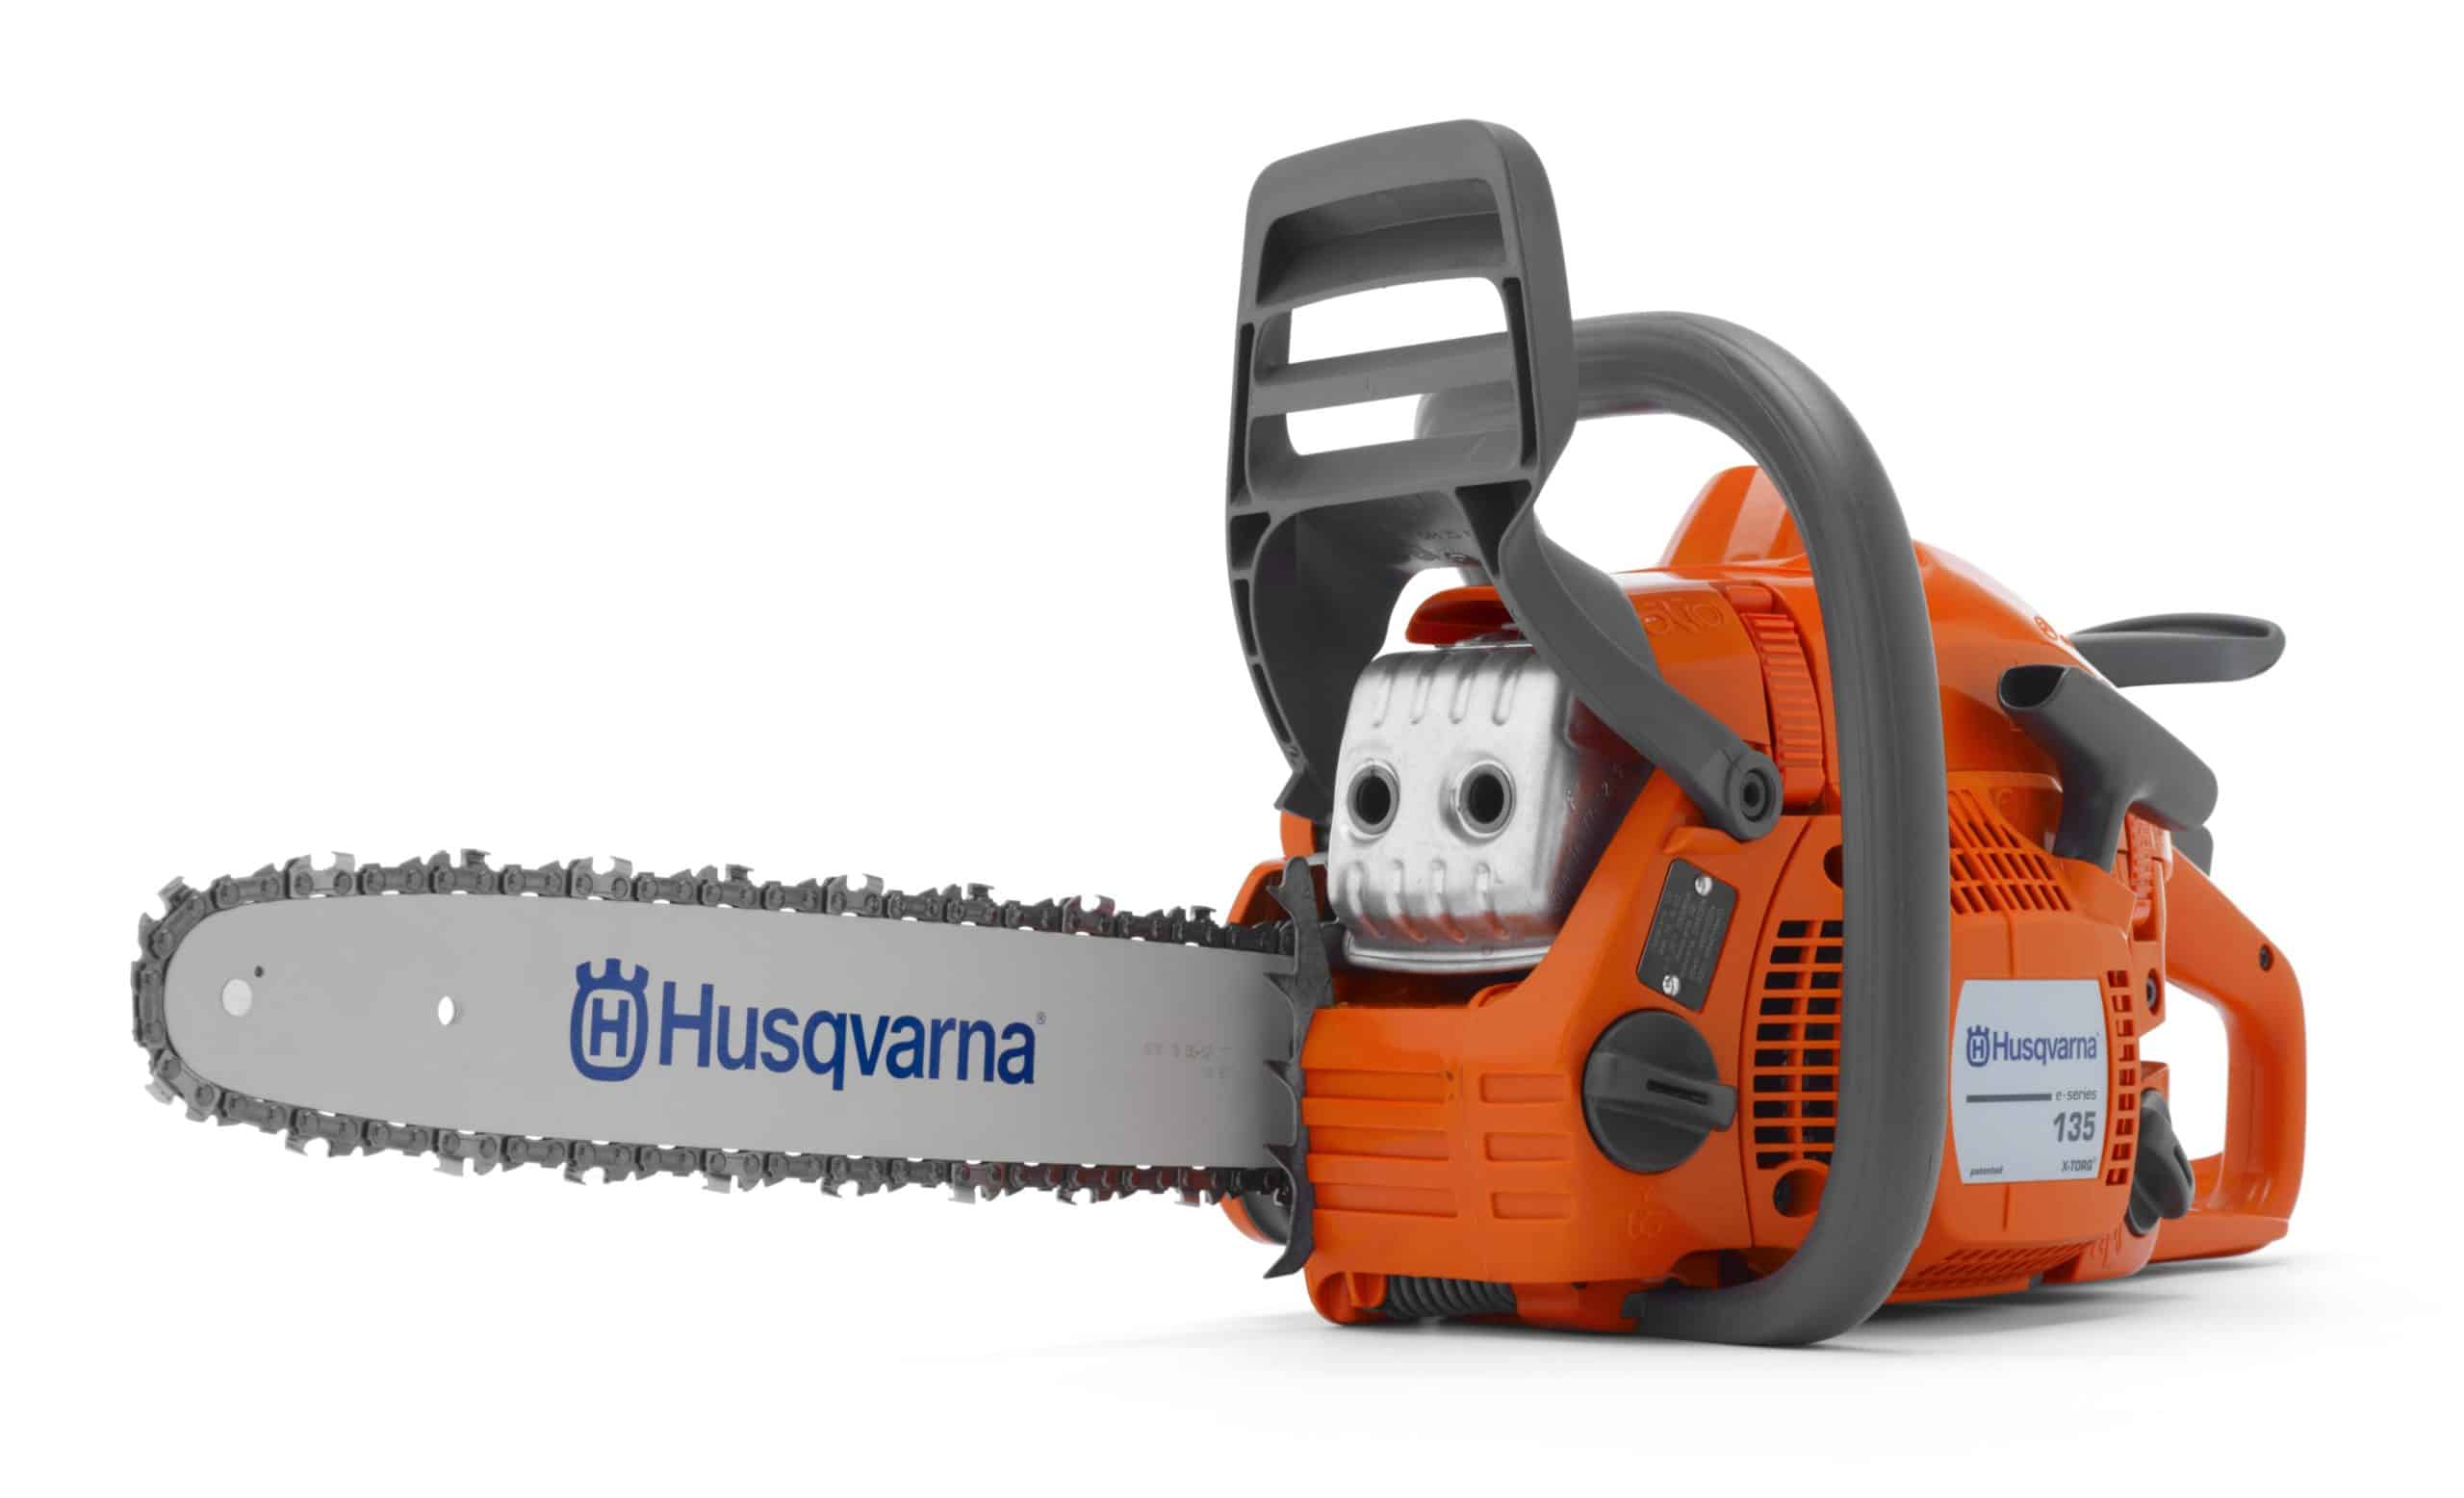 Husqvarna 135 14" Chainsaw